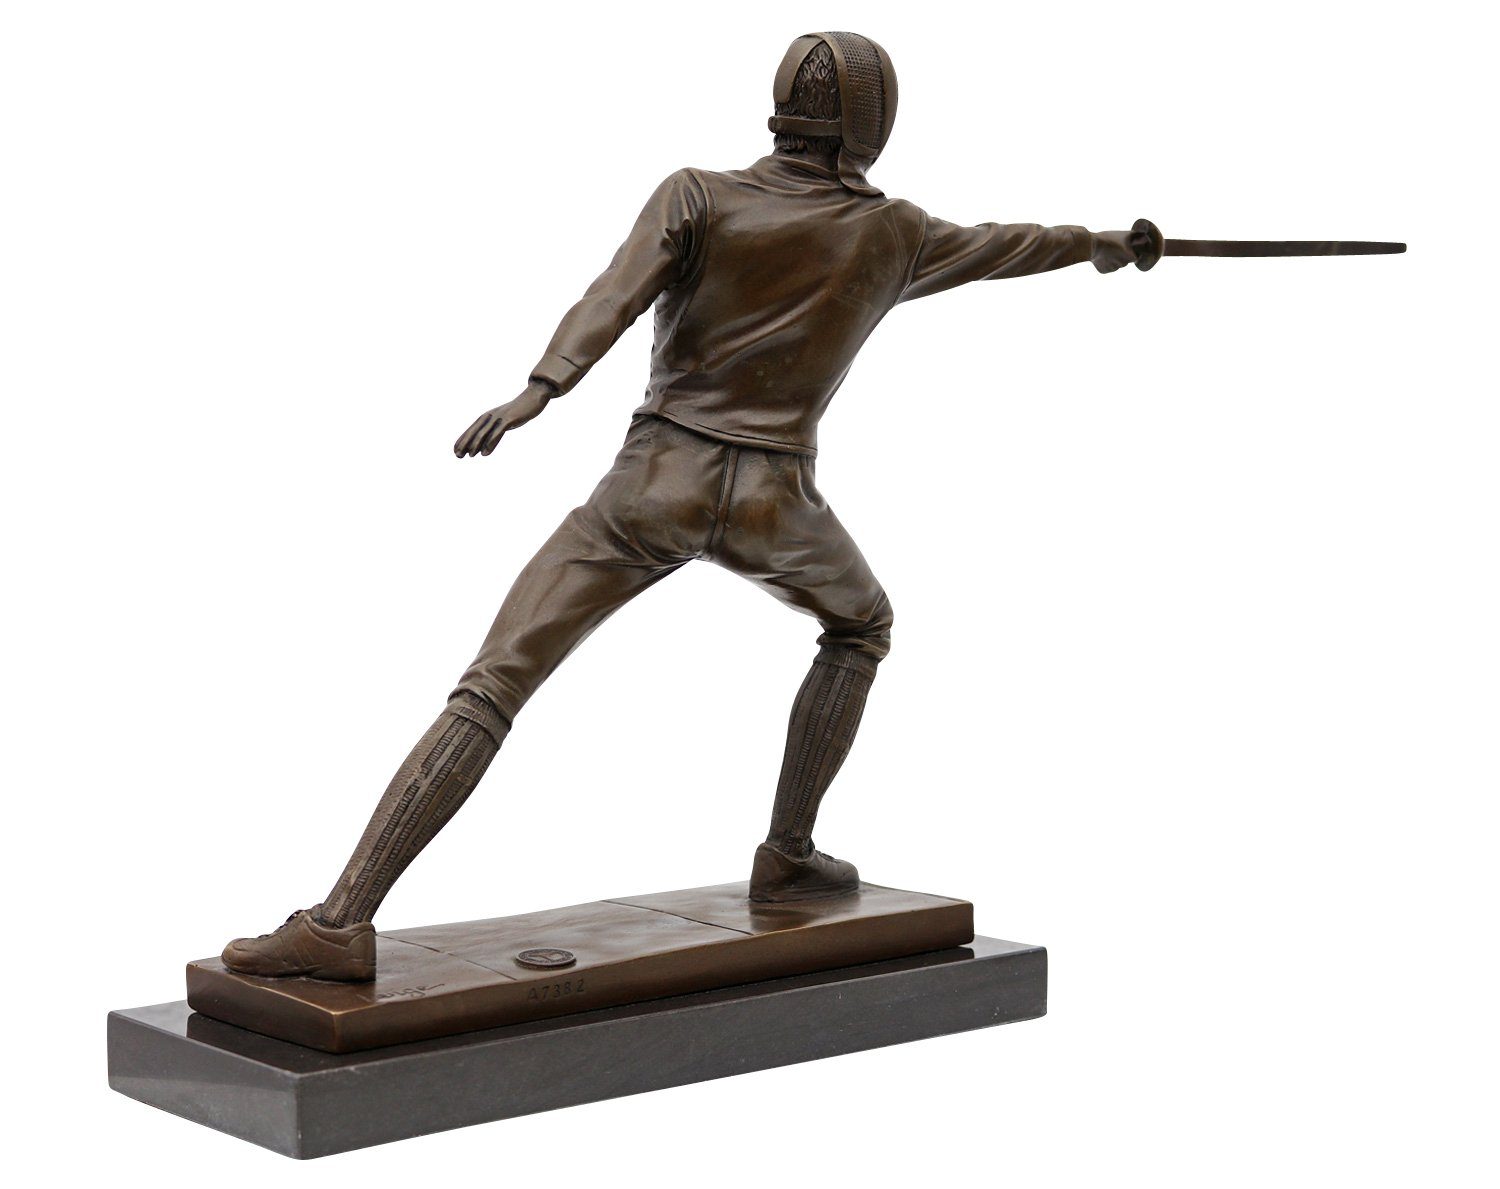 Aubaho Skulptur Fechter Bronze Figur Sport Statue Antik-Stil Bronzeskulptur 44cm im